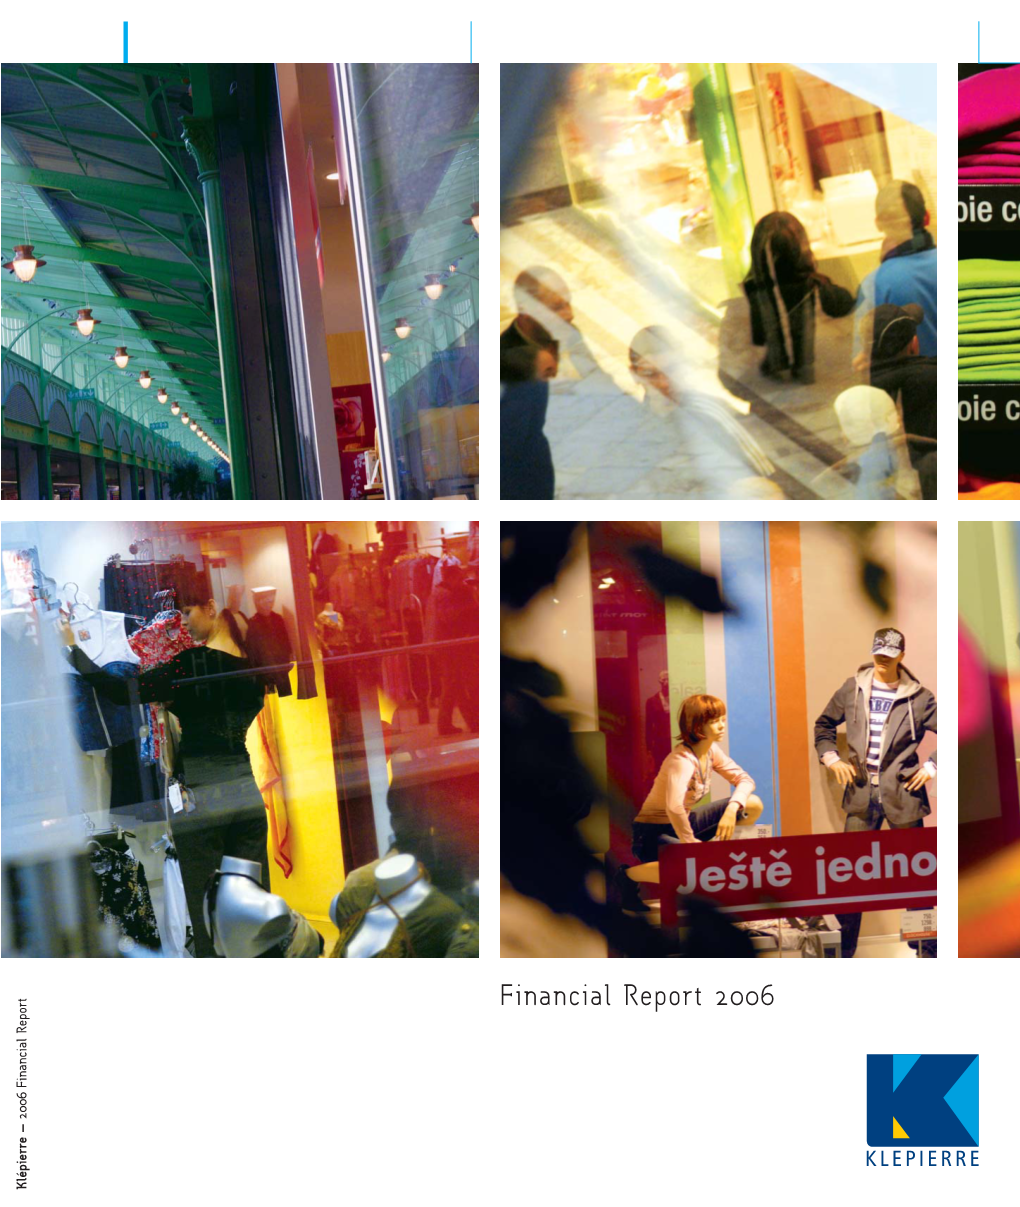 Financial Report 2006